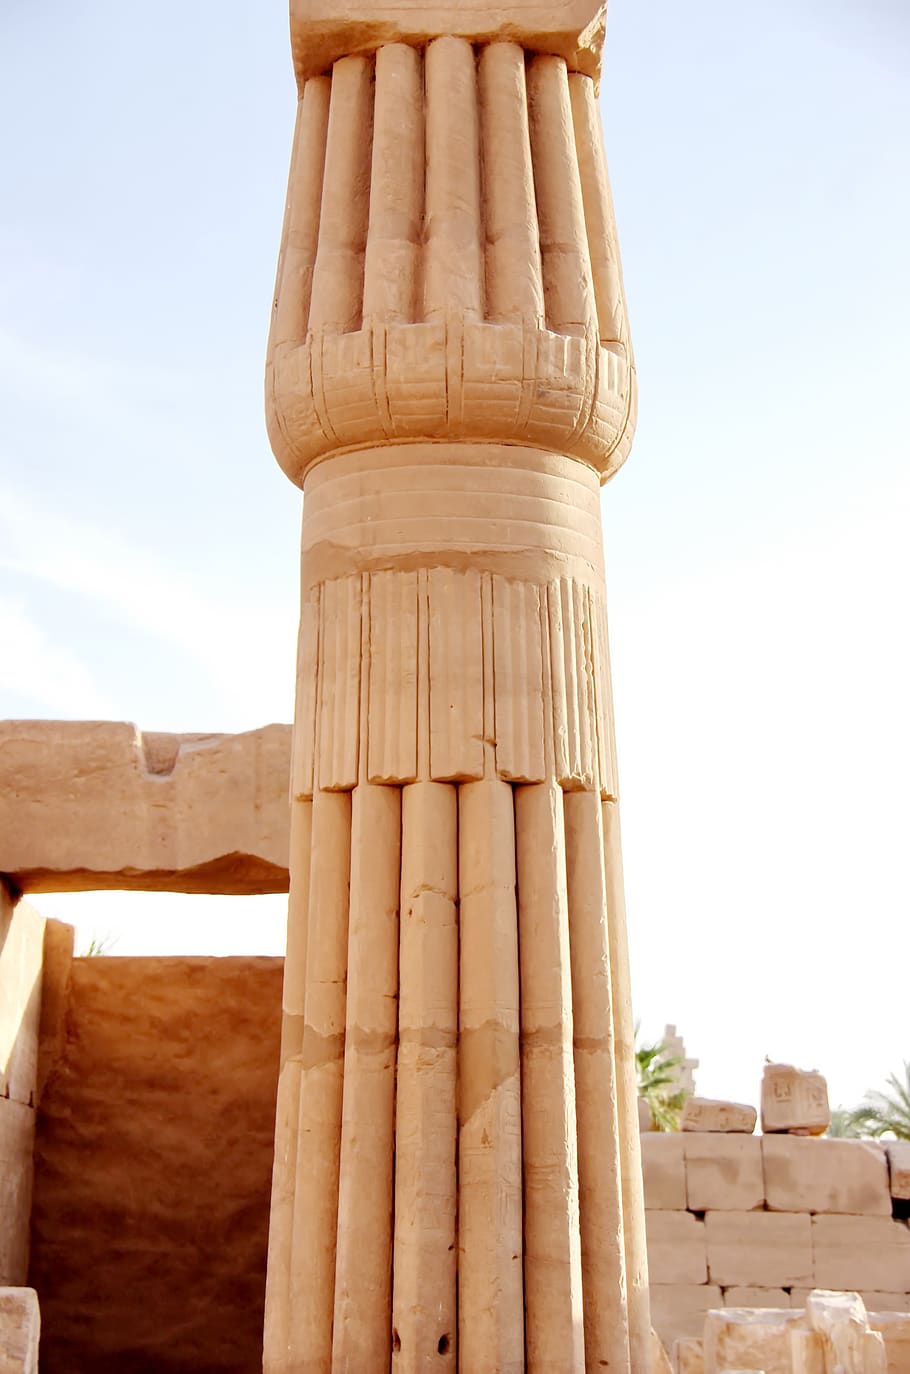 Egipto, Karnak, columna, grabado, columna papiriforme, arquitectura, antiguo, Pierre, escultura, viajes